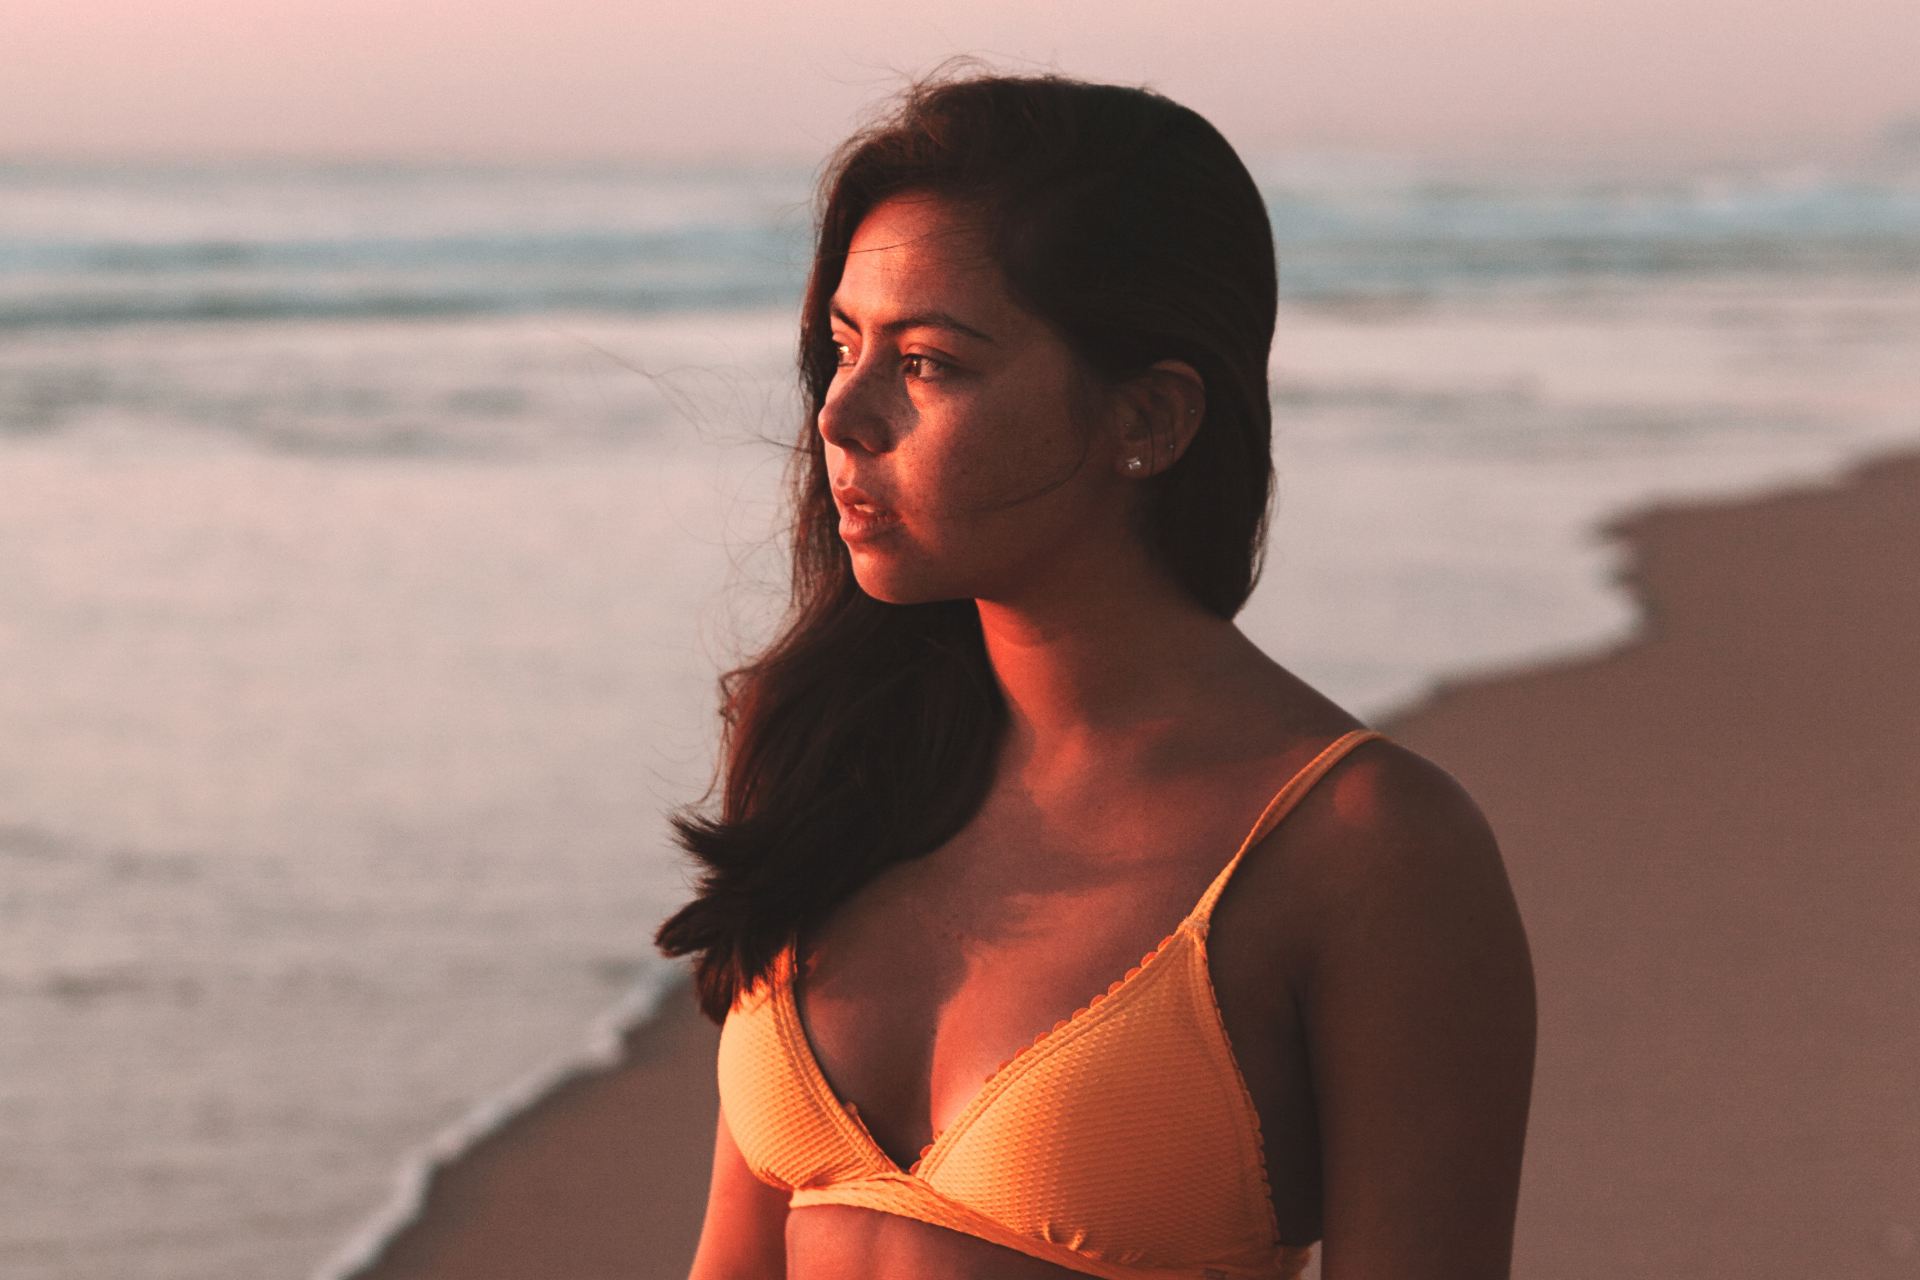 woman in white bikini top standing on beach during sunset